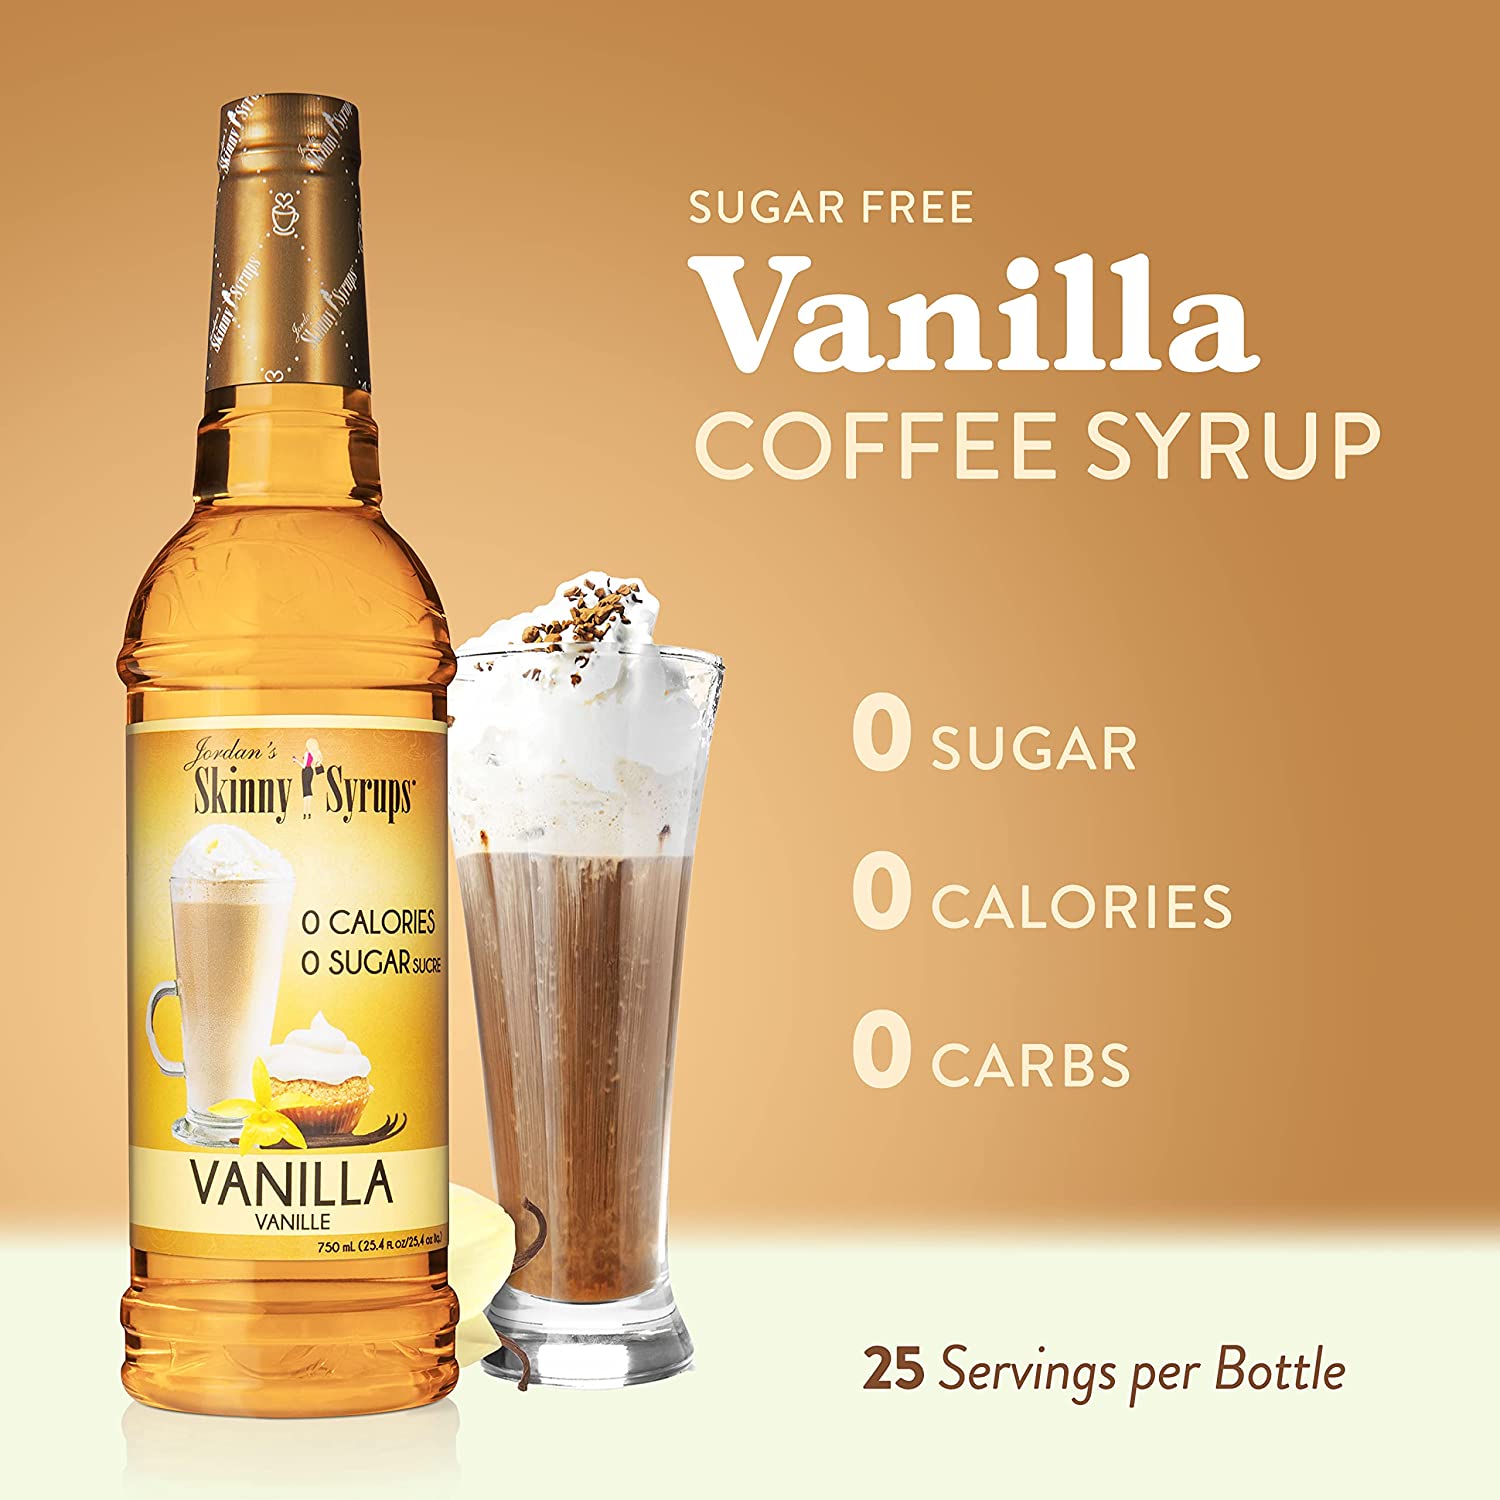 Jordan's Skinny Syrups Vanilla, Sugar Free Flavoring Syrup, 25.4 Ounce Bottle